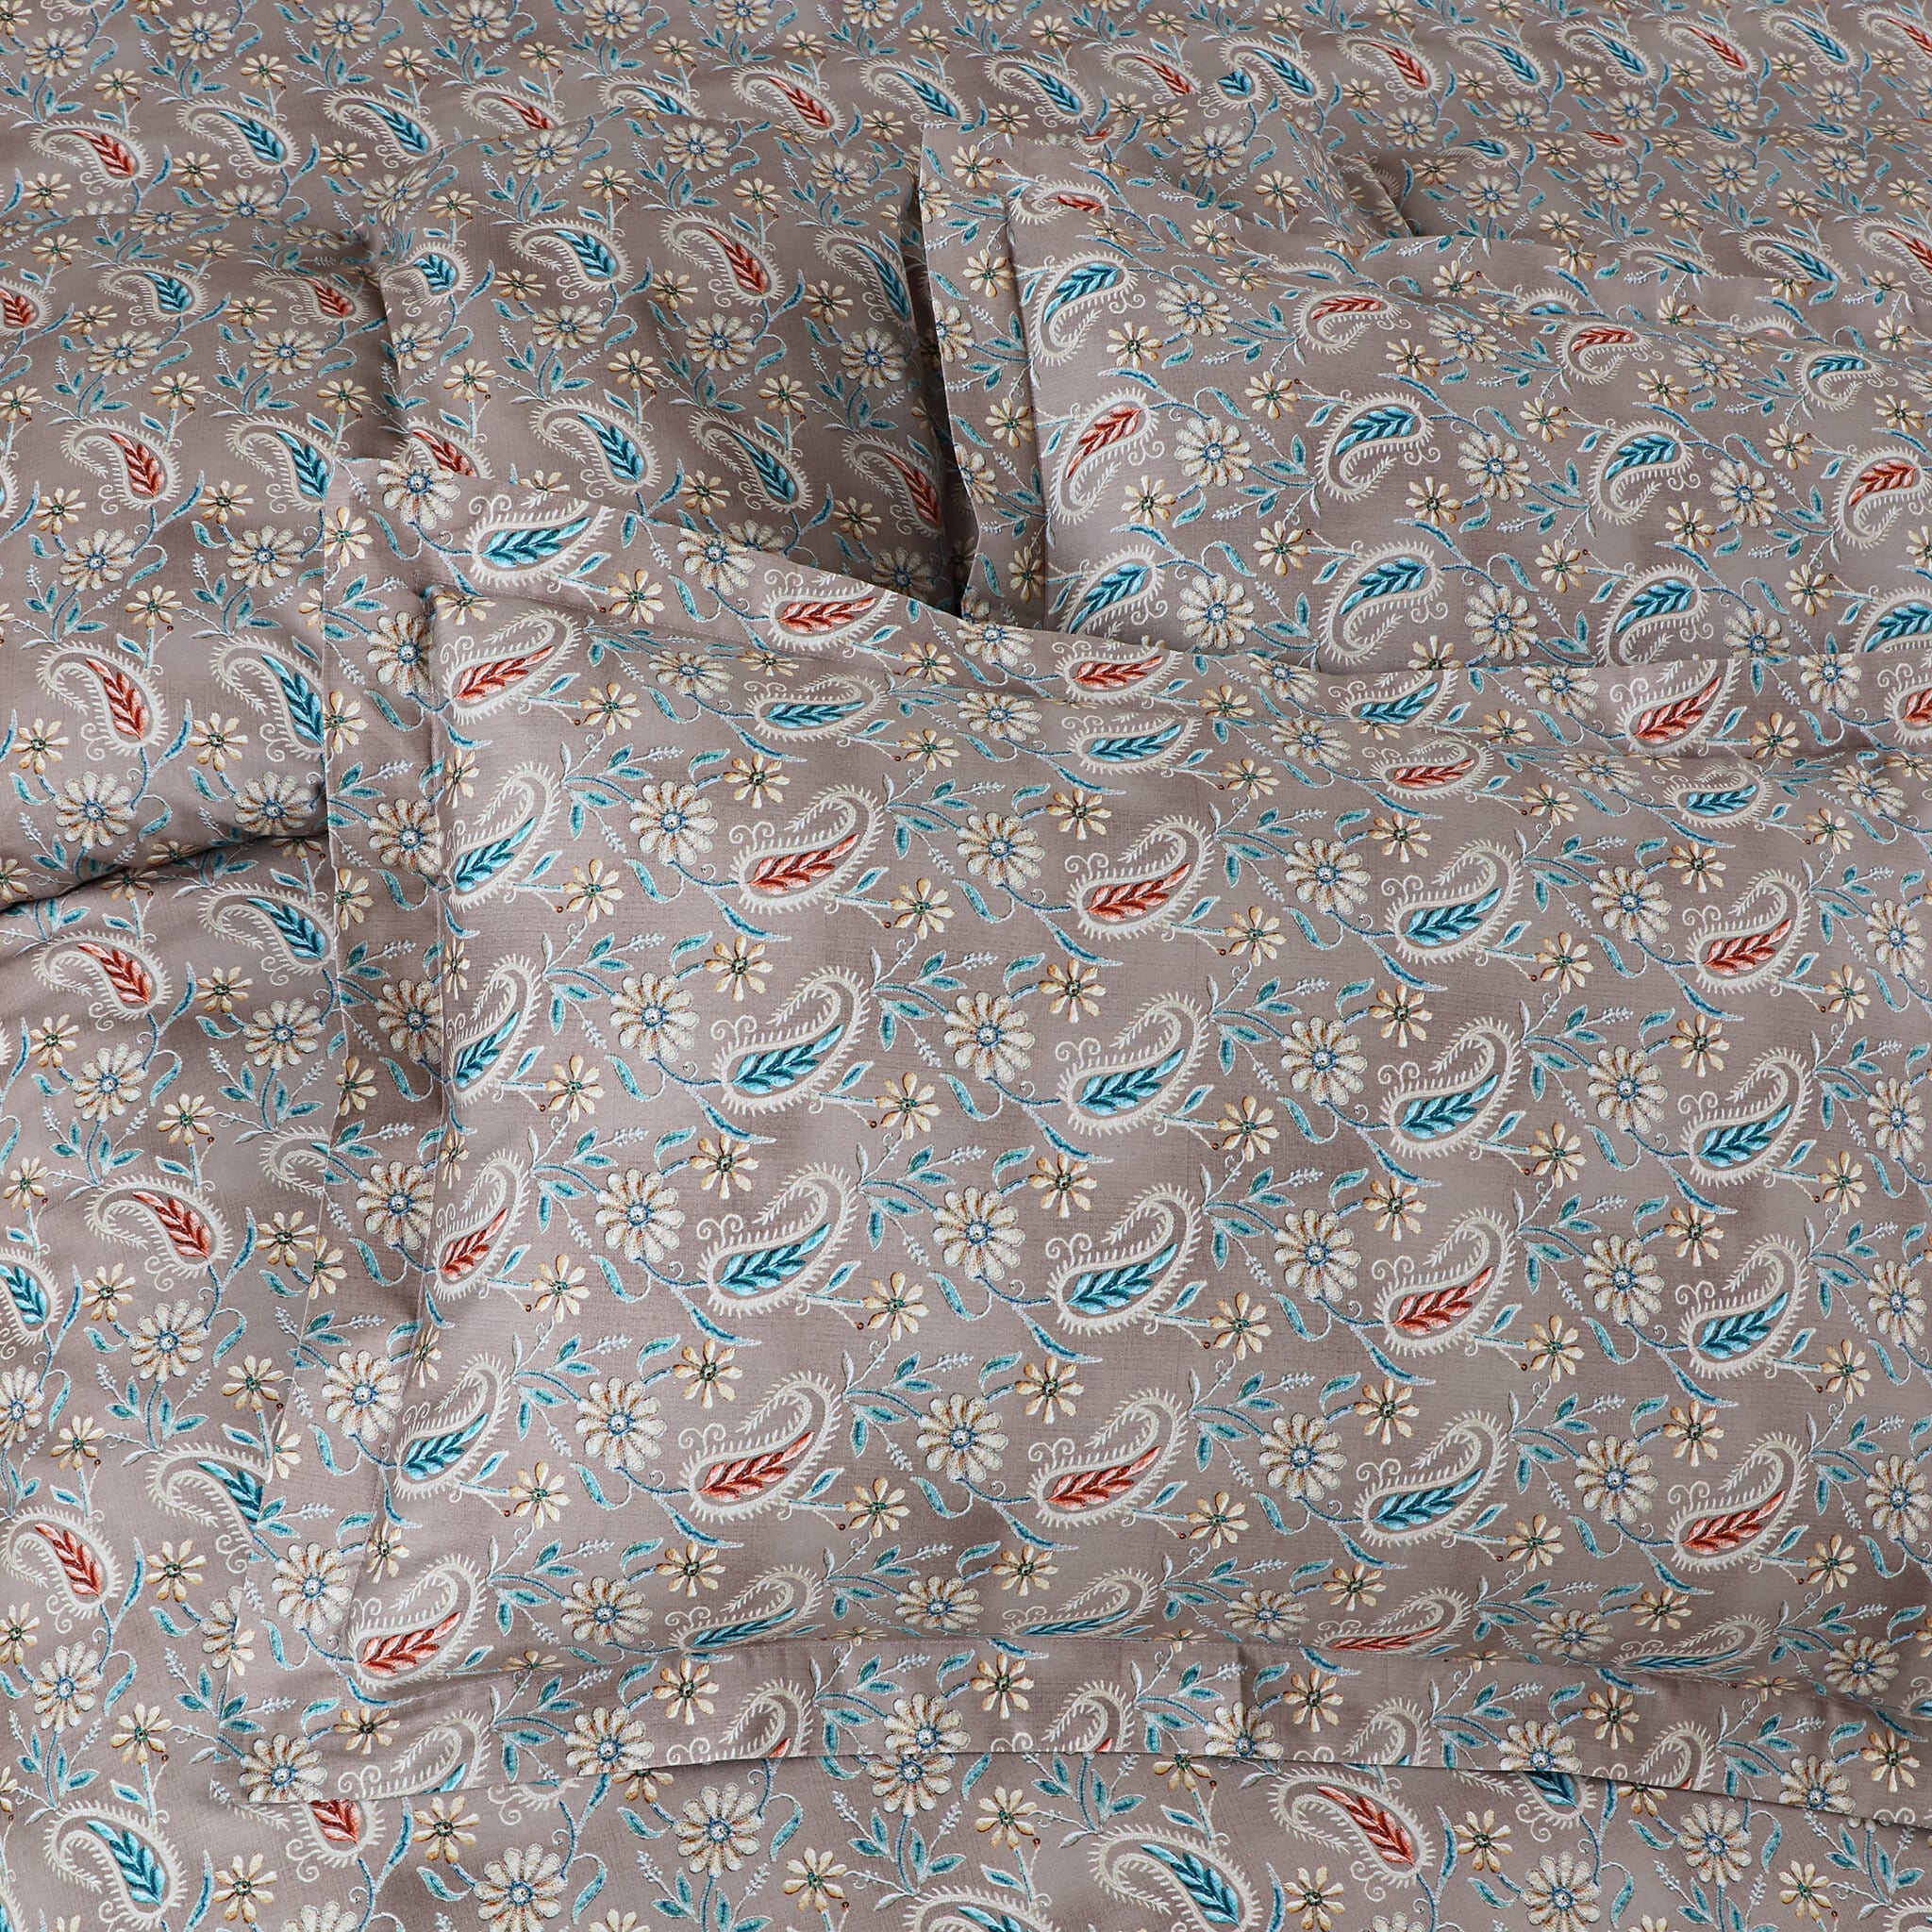 Malako Basel Bedding Set - Taupe Brown Paisley 100% Cotton King Size Bedsheet With Comforter